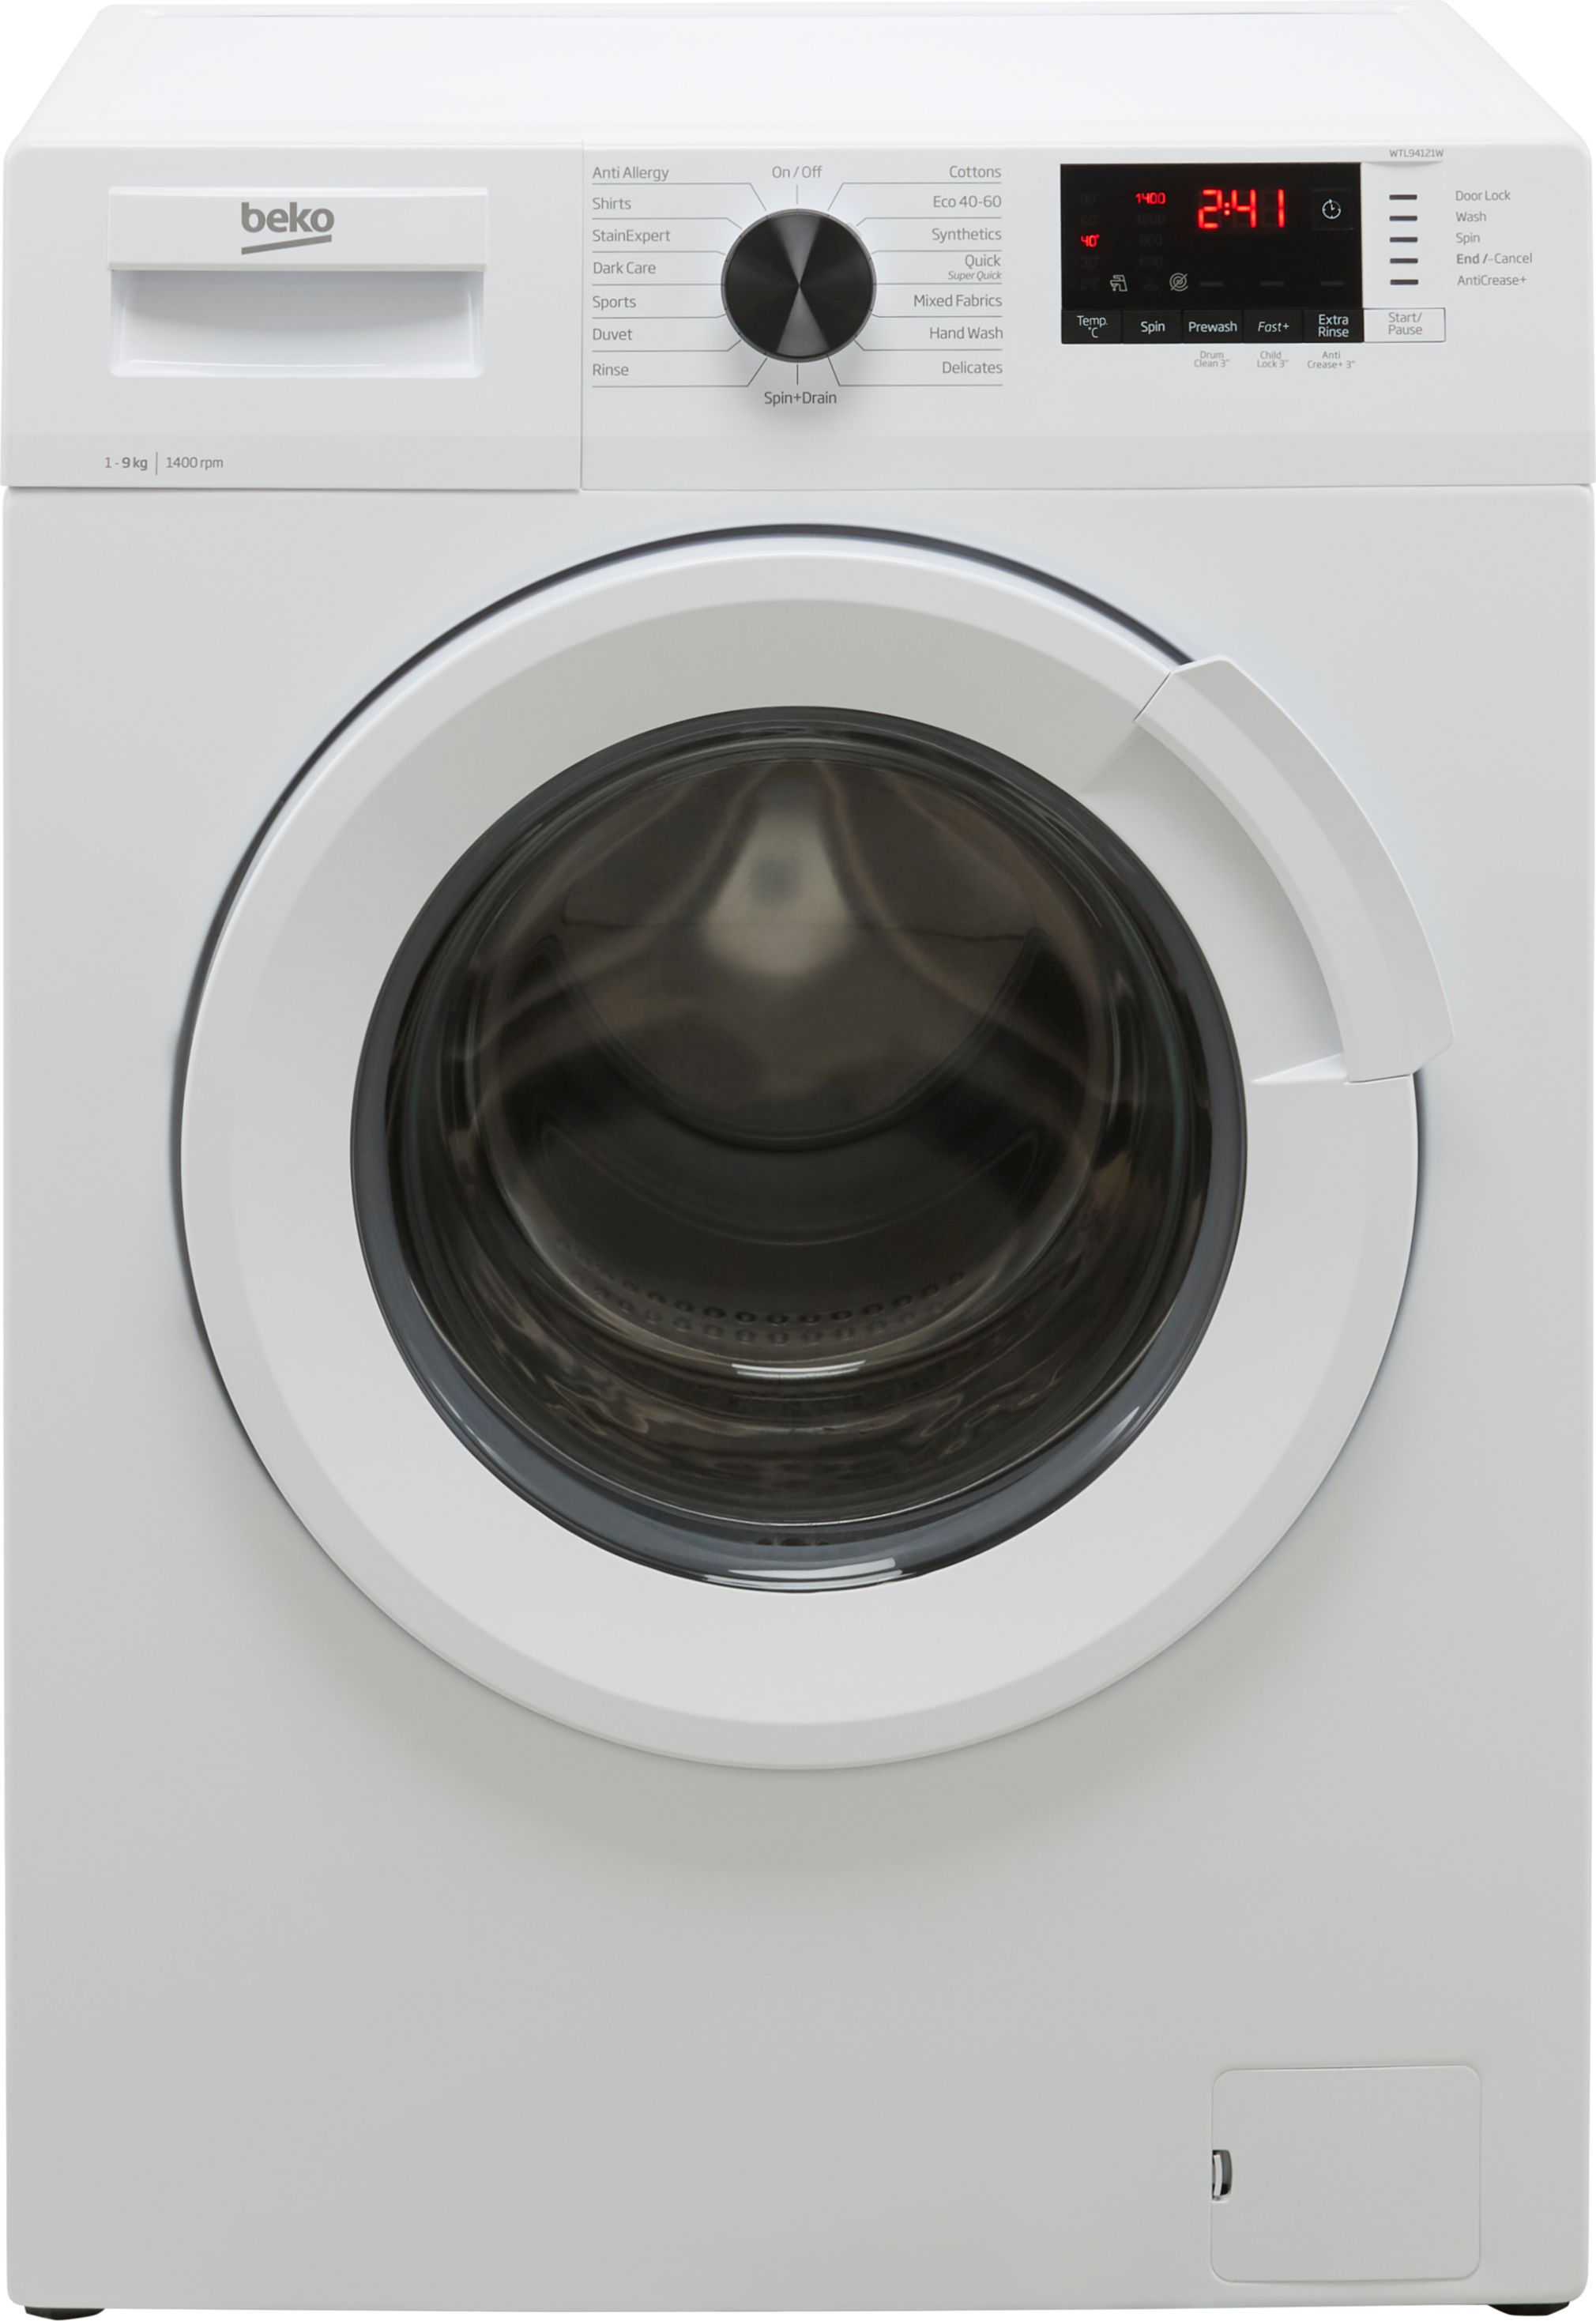 Beko WTL94121W 9kg Washing Machine with 1400 rpm - White - B Rated, White